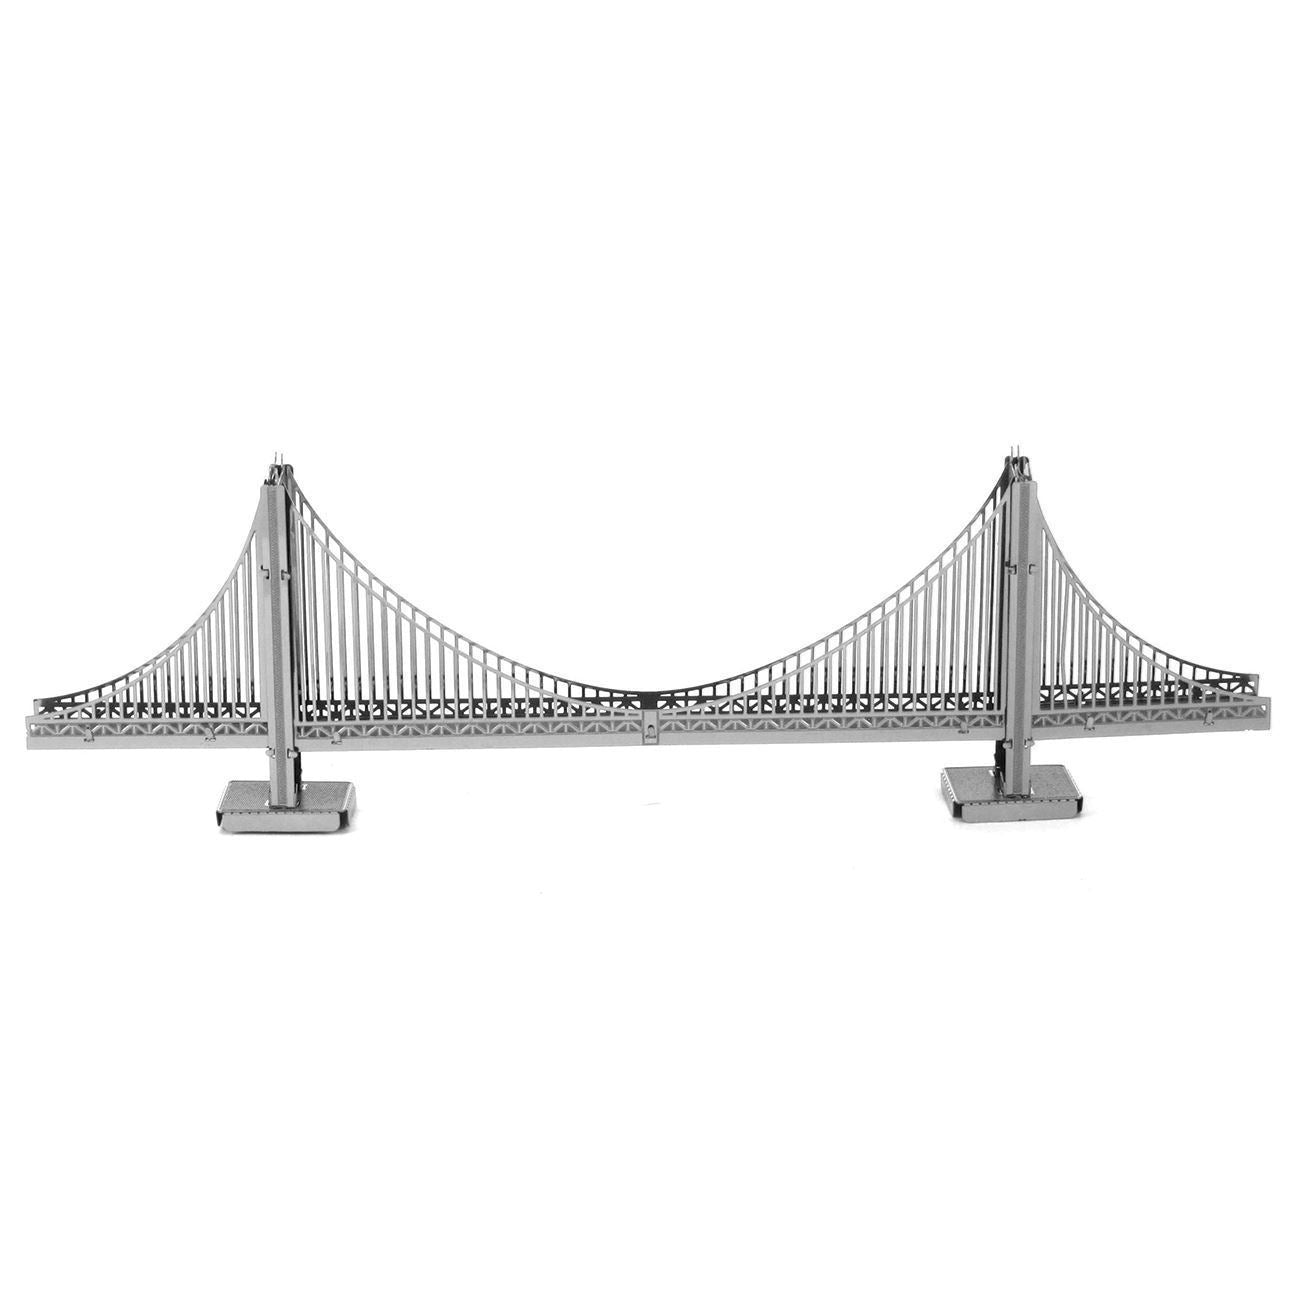 Golden Gate Bridge 3D Metal Model Kit - SFMOMA Museum Store